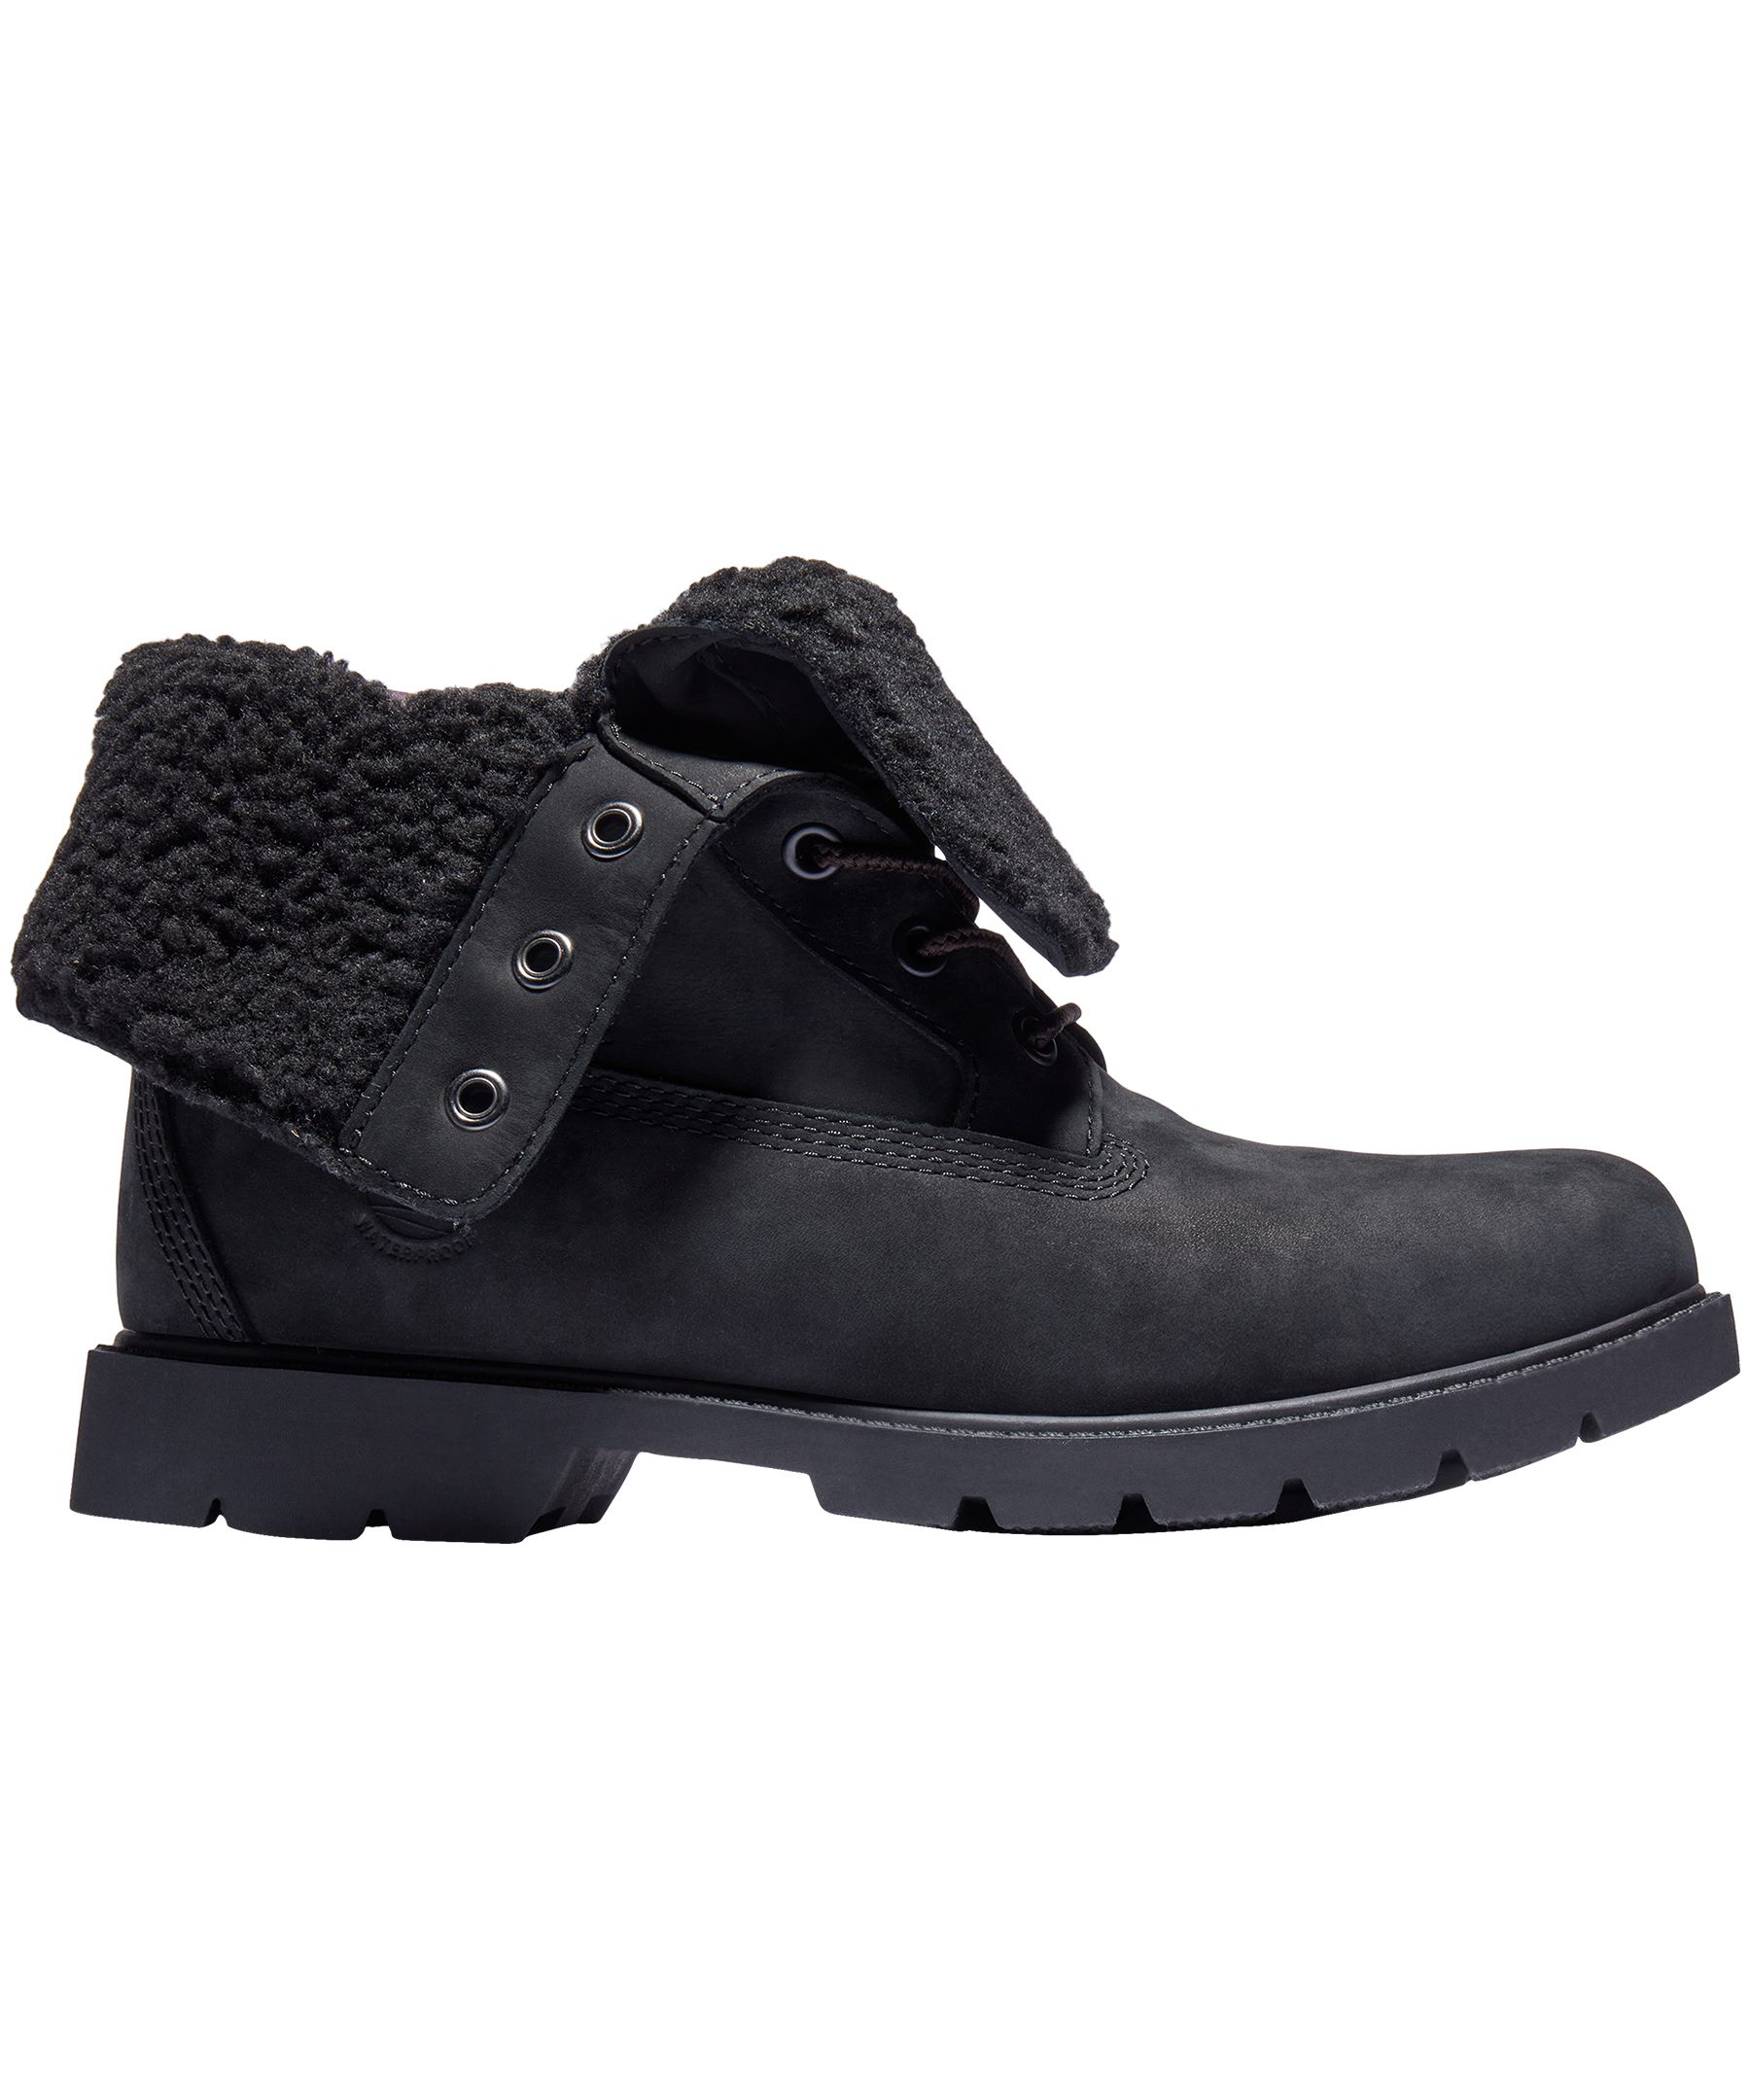 Timberland Women's Linden Woods Waterproof Leather Boots - Black